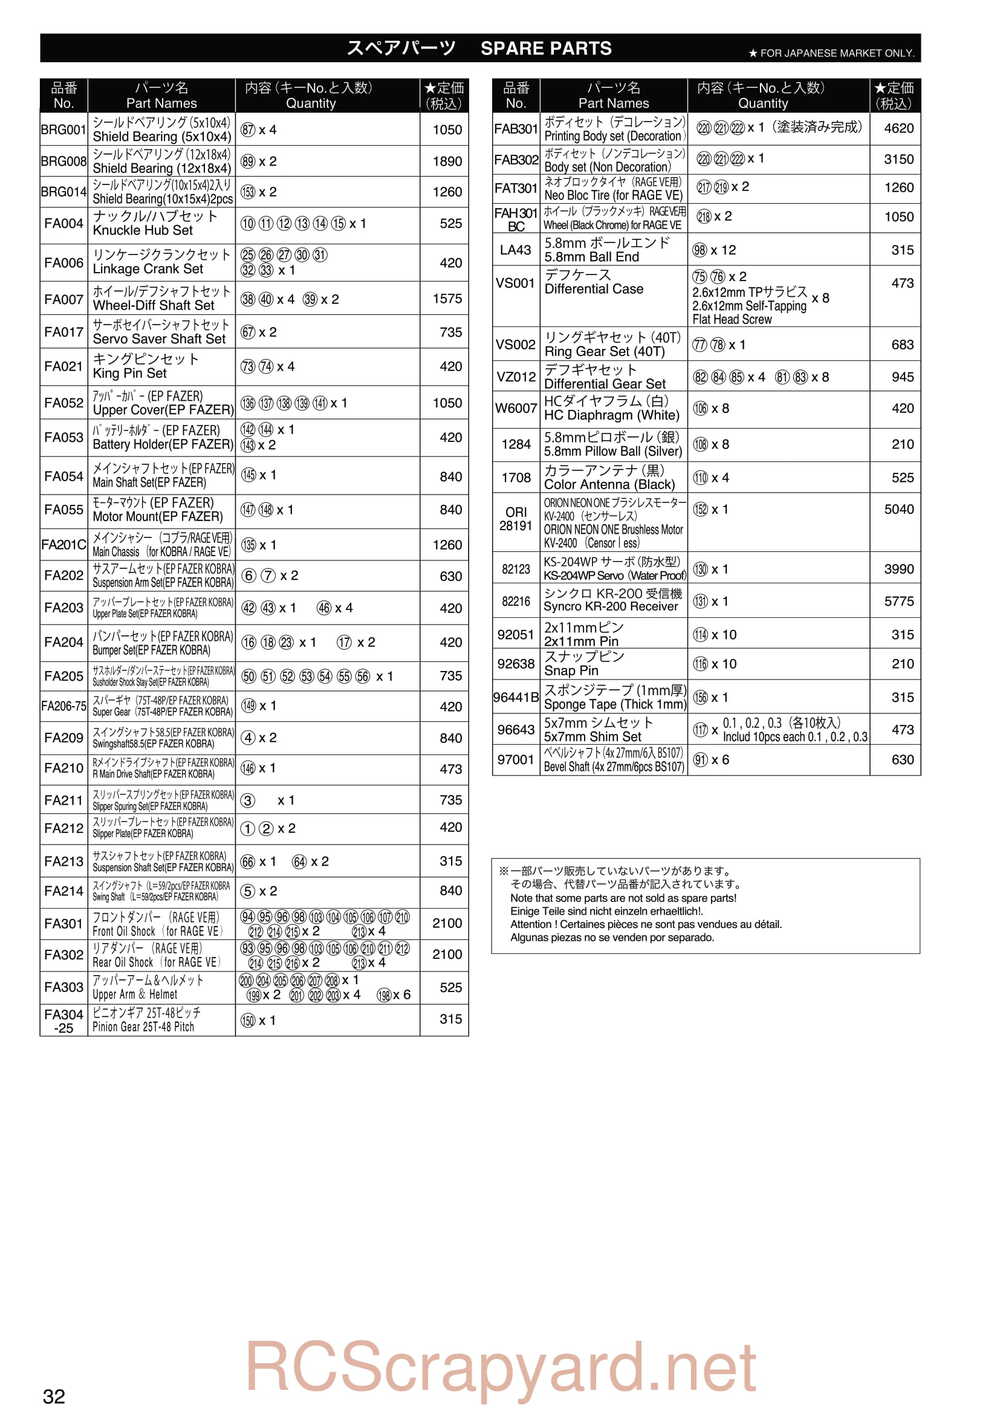 Kyosho - 30992 - EP Fazer Rage VE - Manual - Page 32